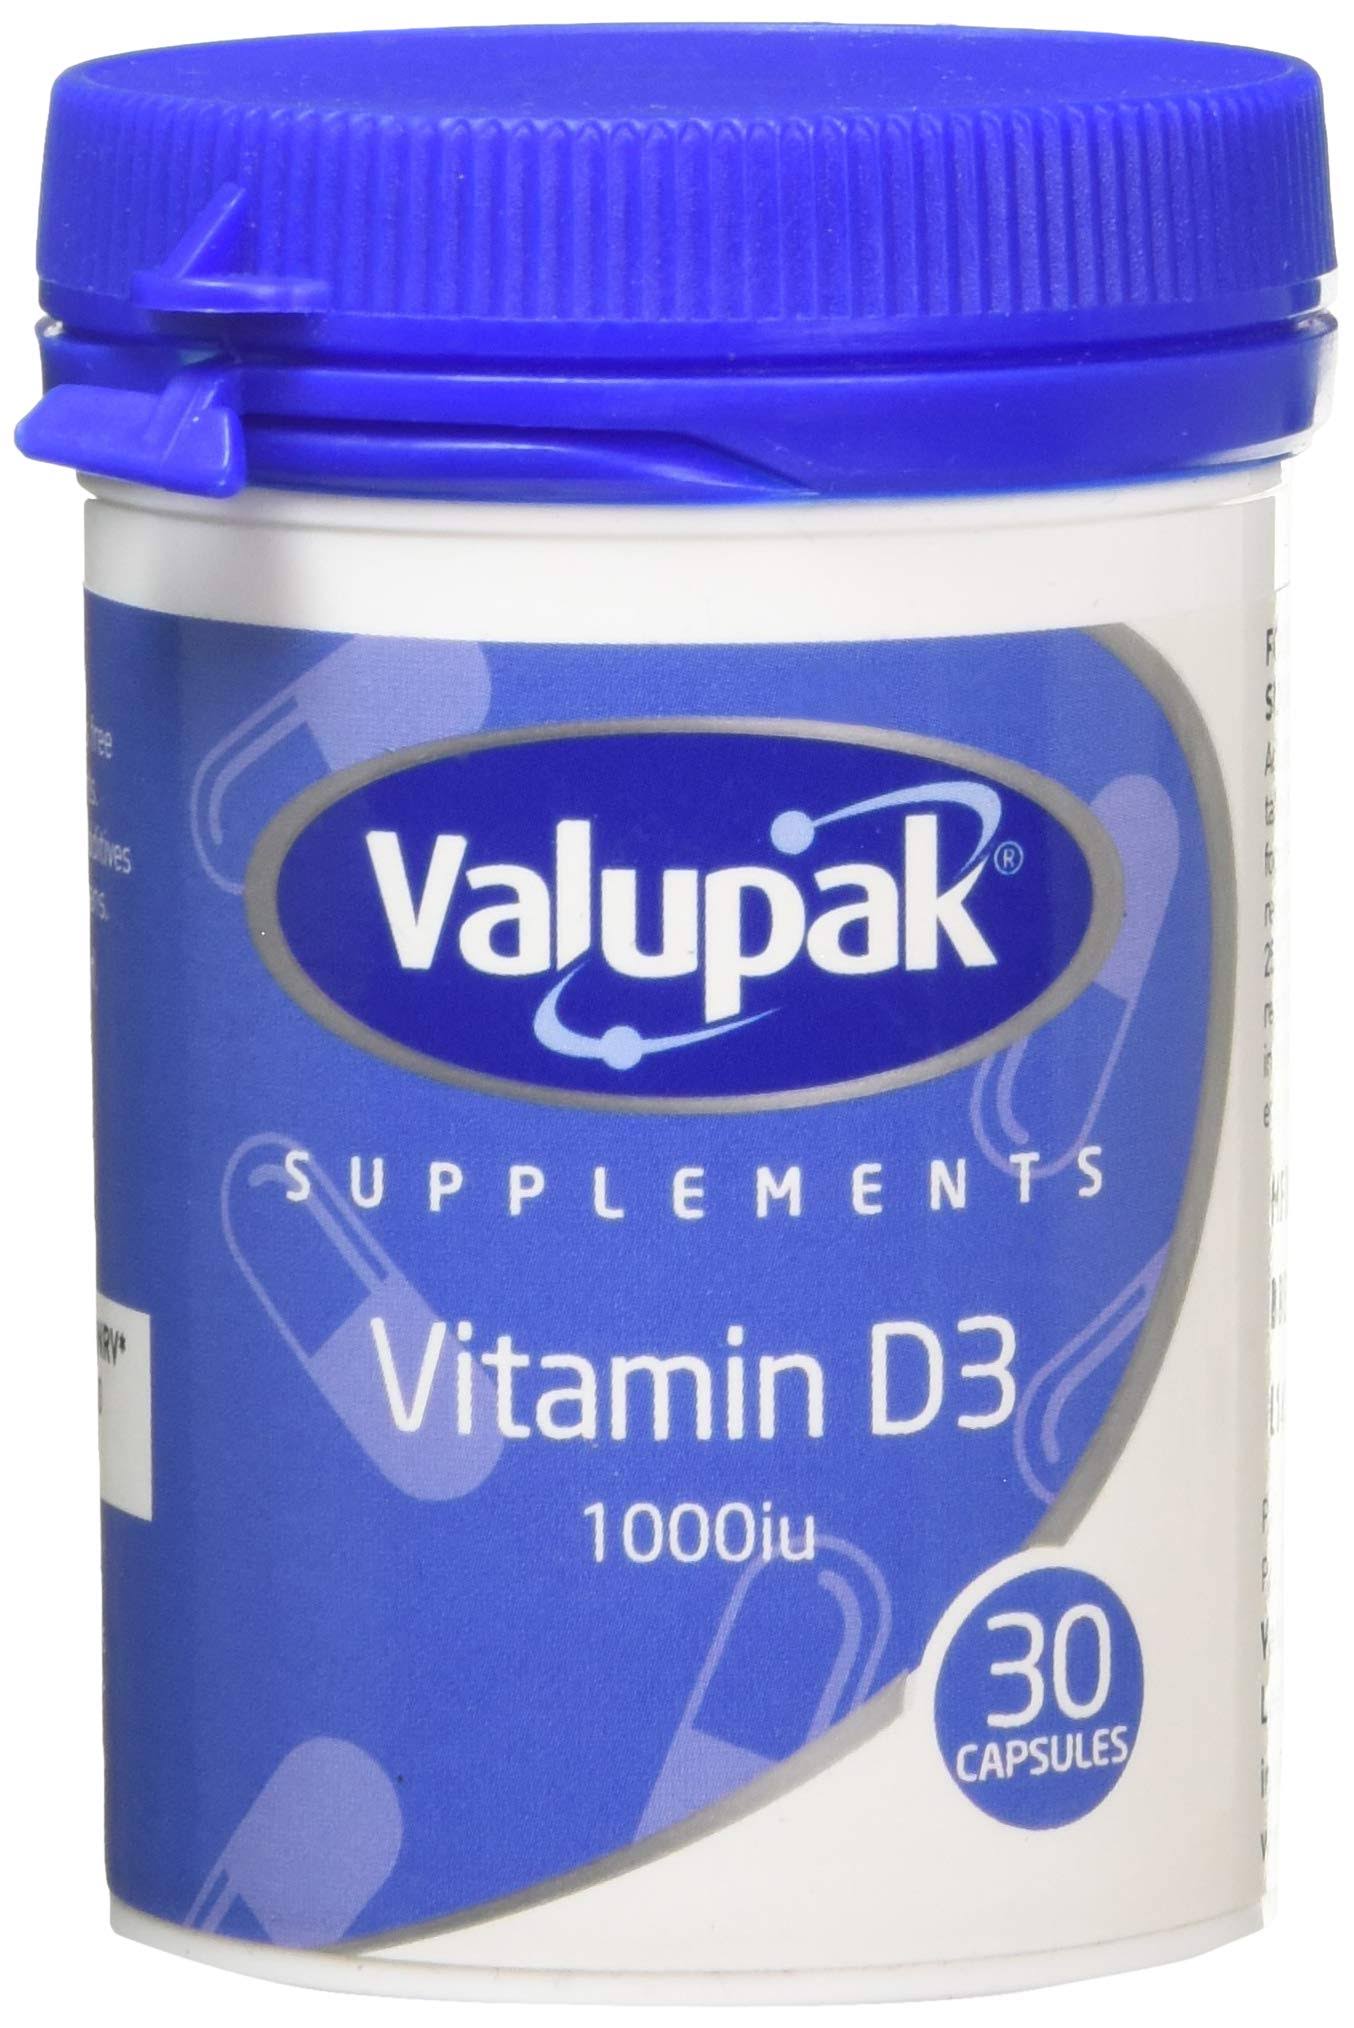 Valupak Vitamin D3 1000iu 100 G